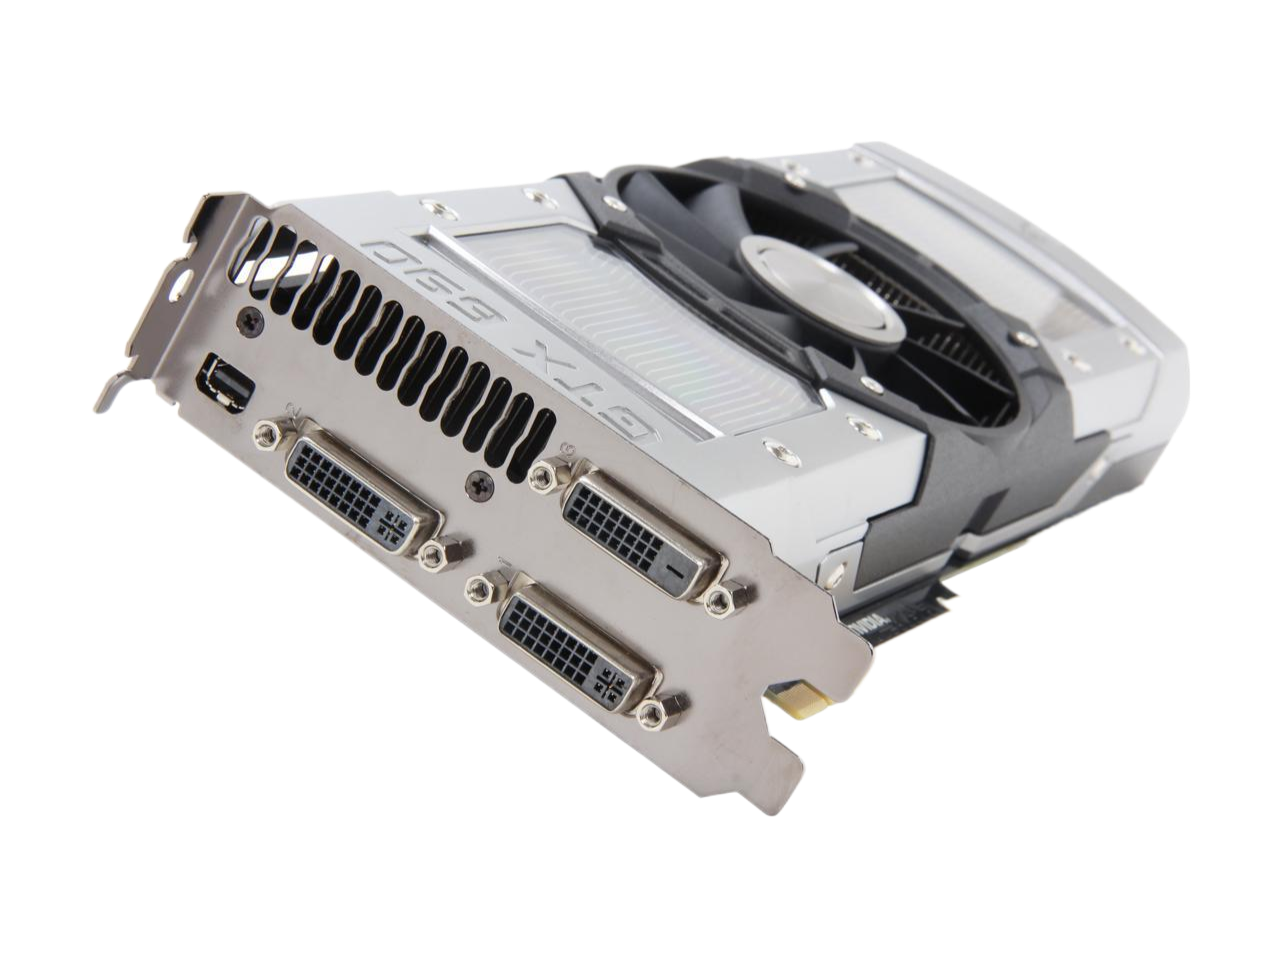 EVGA GeForce GTX 690 4GB GDDR5 PCI Express 3.0 x16 SLI Support Video Card 04G-P4-2690-KR